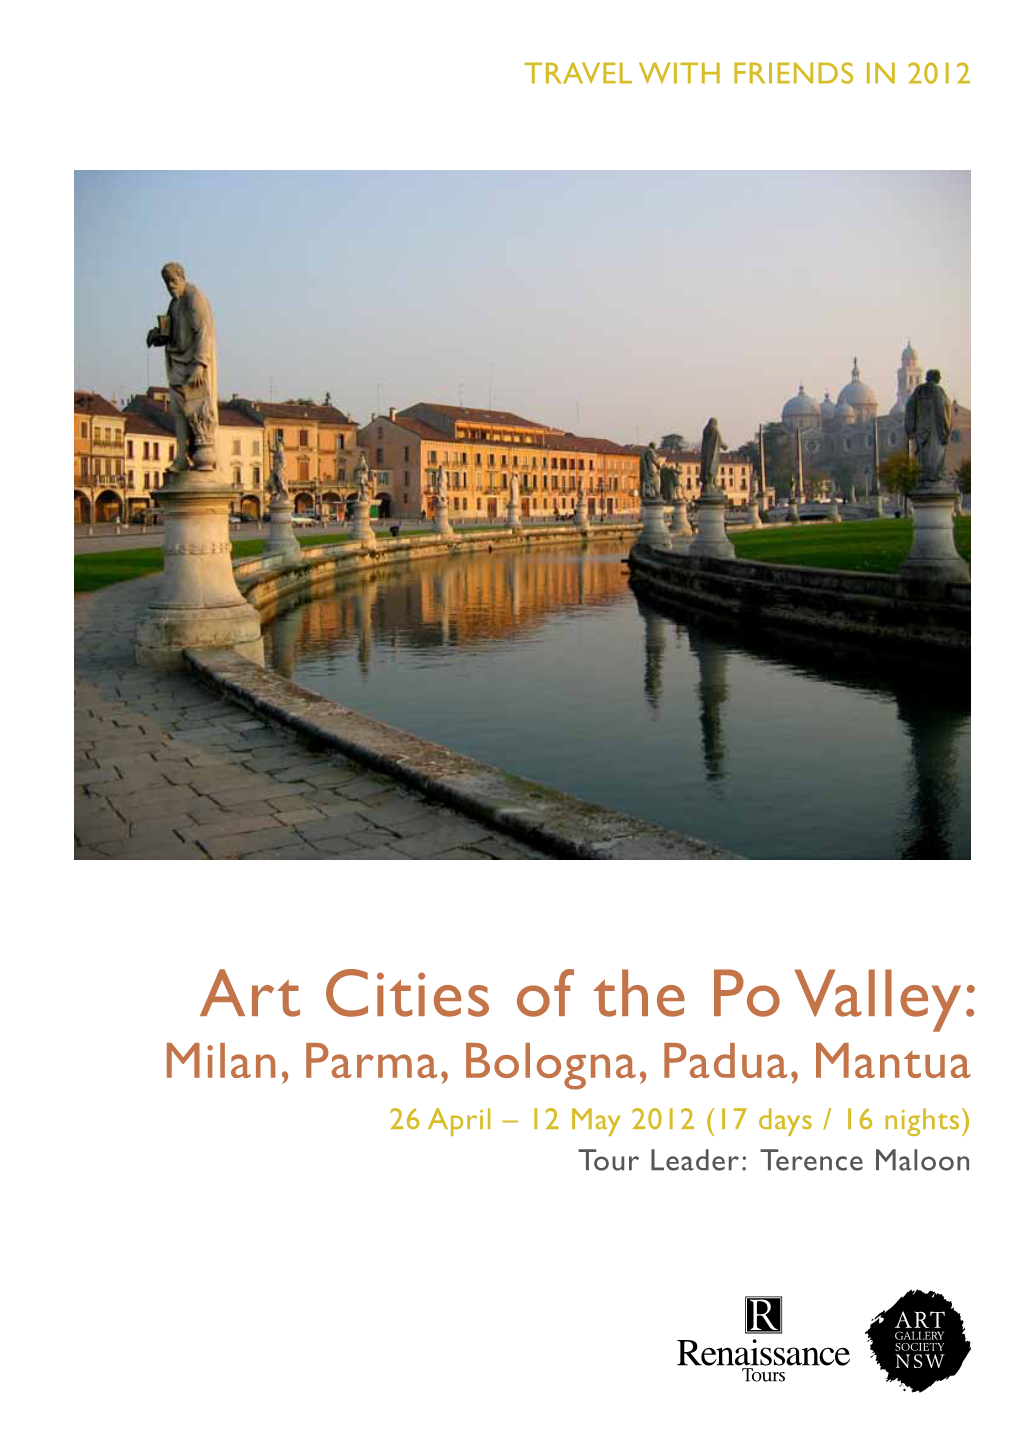 Art Cities of the Po Valley: Milan, Parma, Bologna, Padua, Mantua 26 April – 12 May 2012 (17 Days / 16 Nights) Tour Leader: Terence Maloon Art Cities of the Po Valley